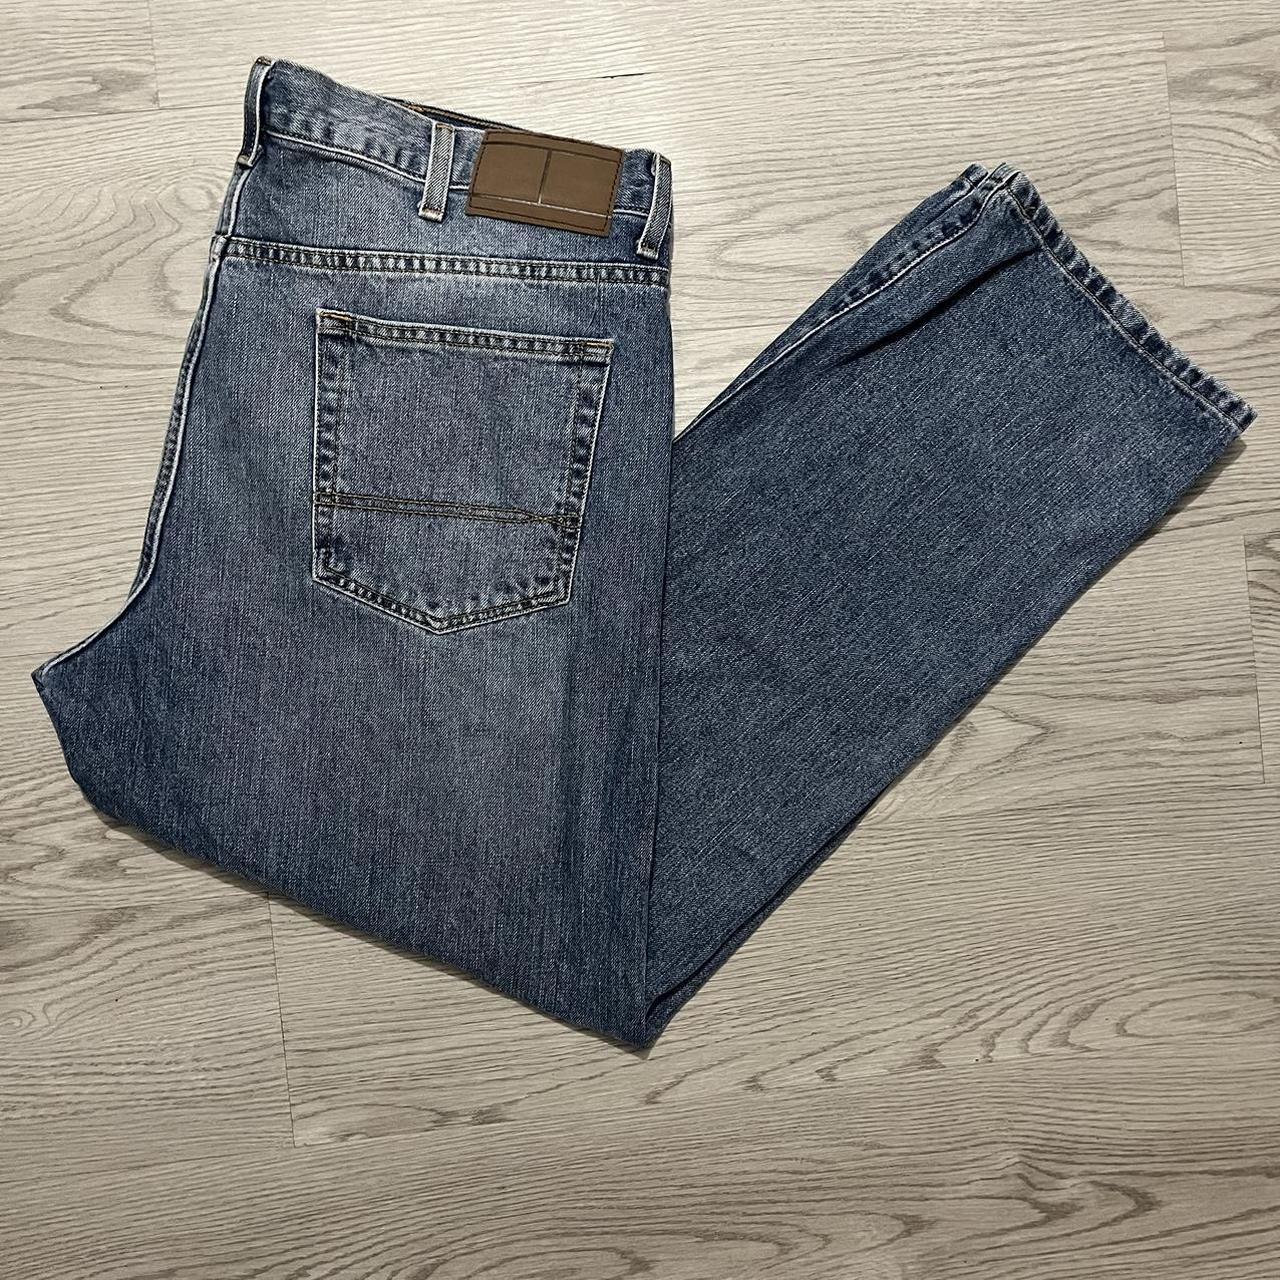 Lucky brand jeans -  México